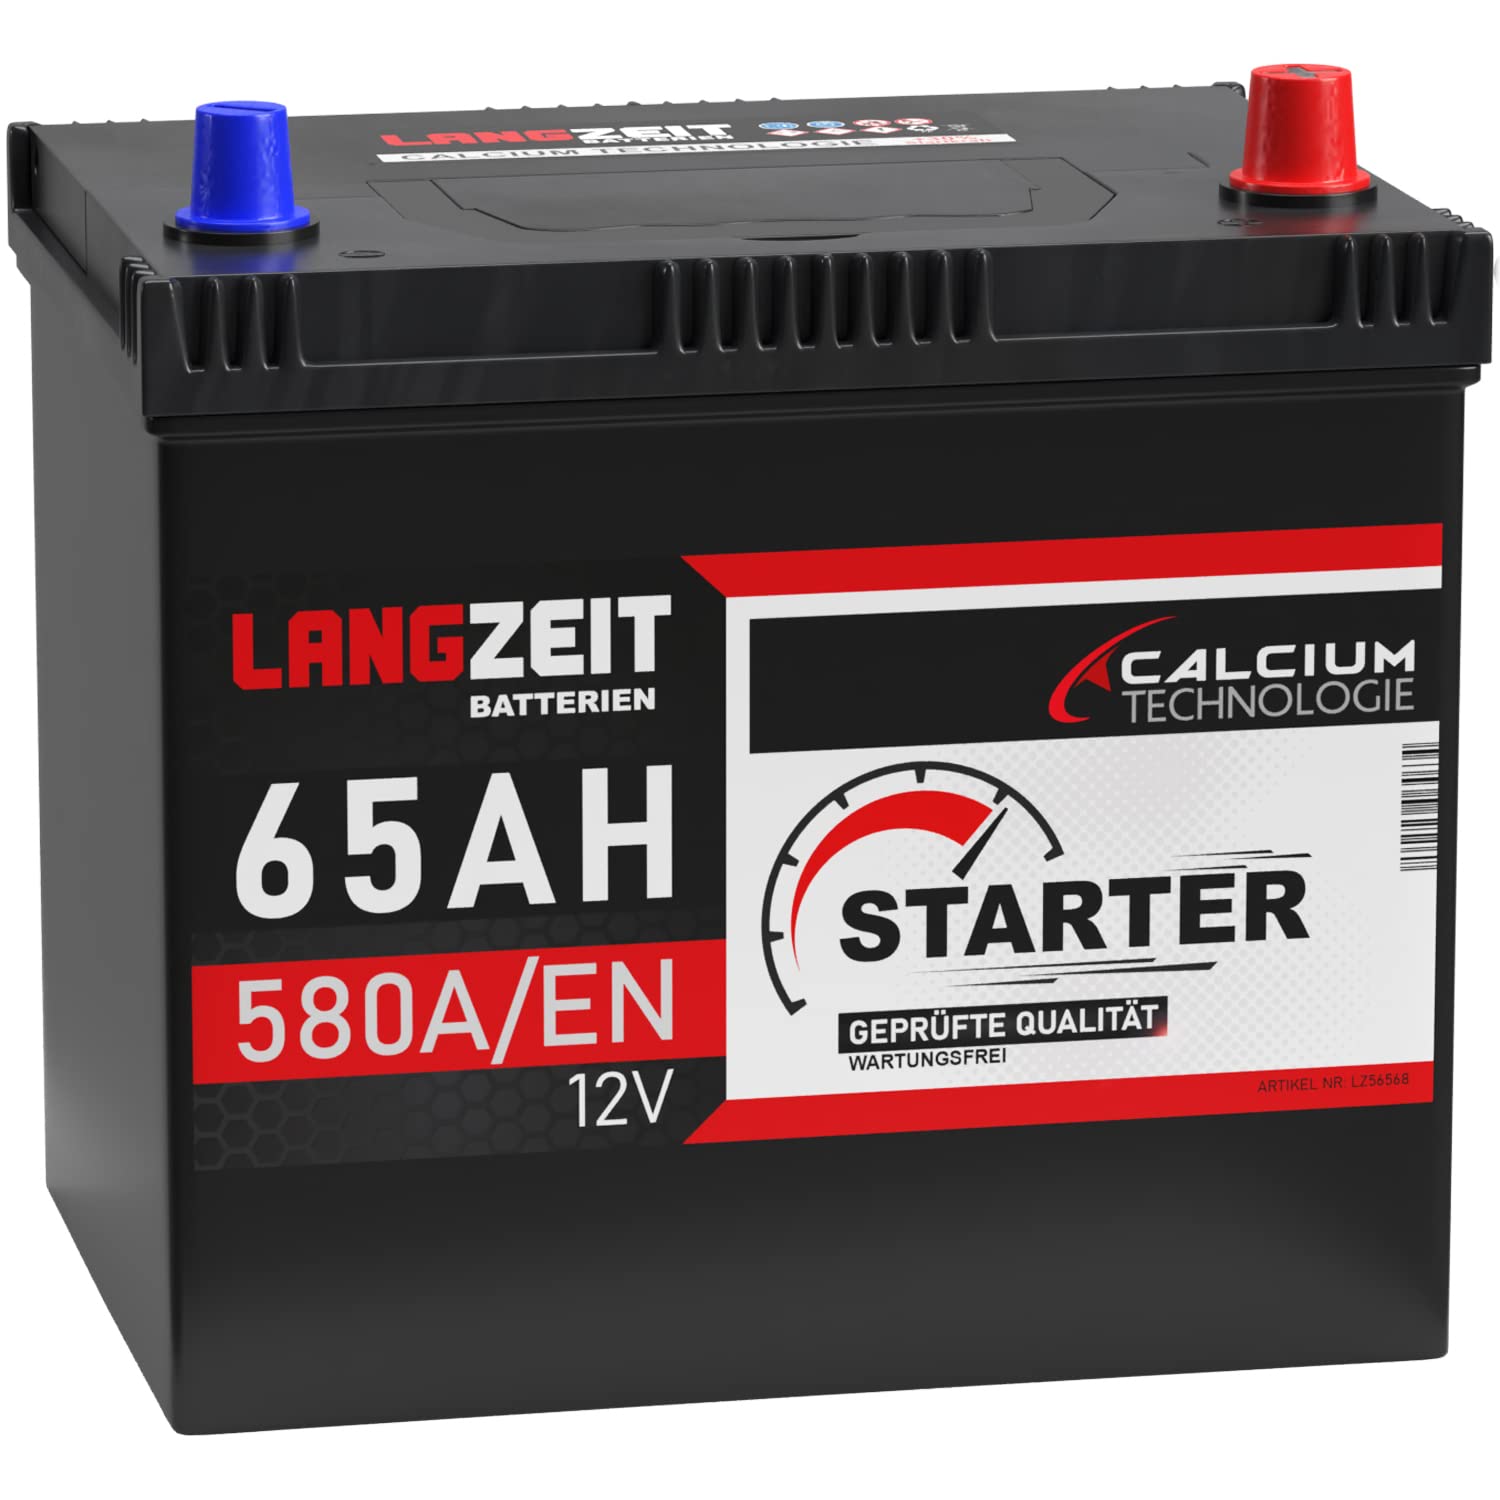 LANGZEIT ASIA Autobatterie 65Ah 12V 580A/EN ASIA Batterie Plus-Pol Rechts 30% mehr Startleistung ersetzt 60Ah von LANGZEIT Batterien